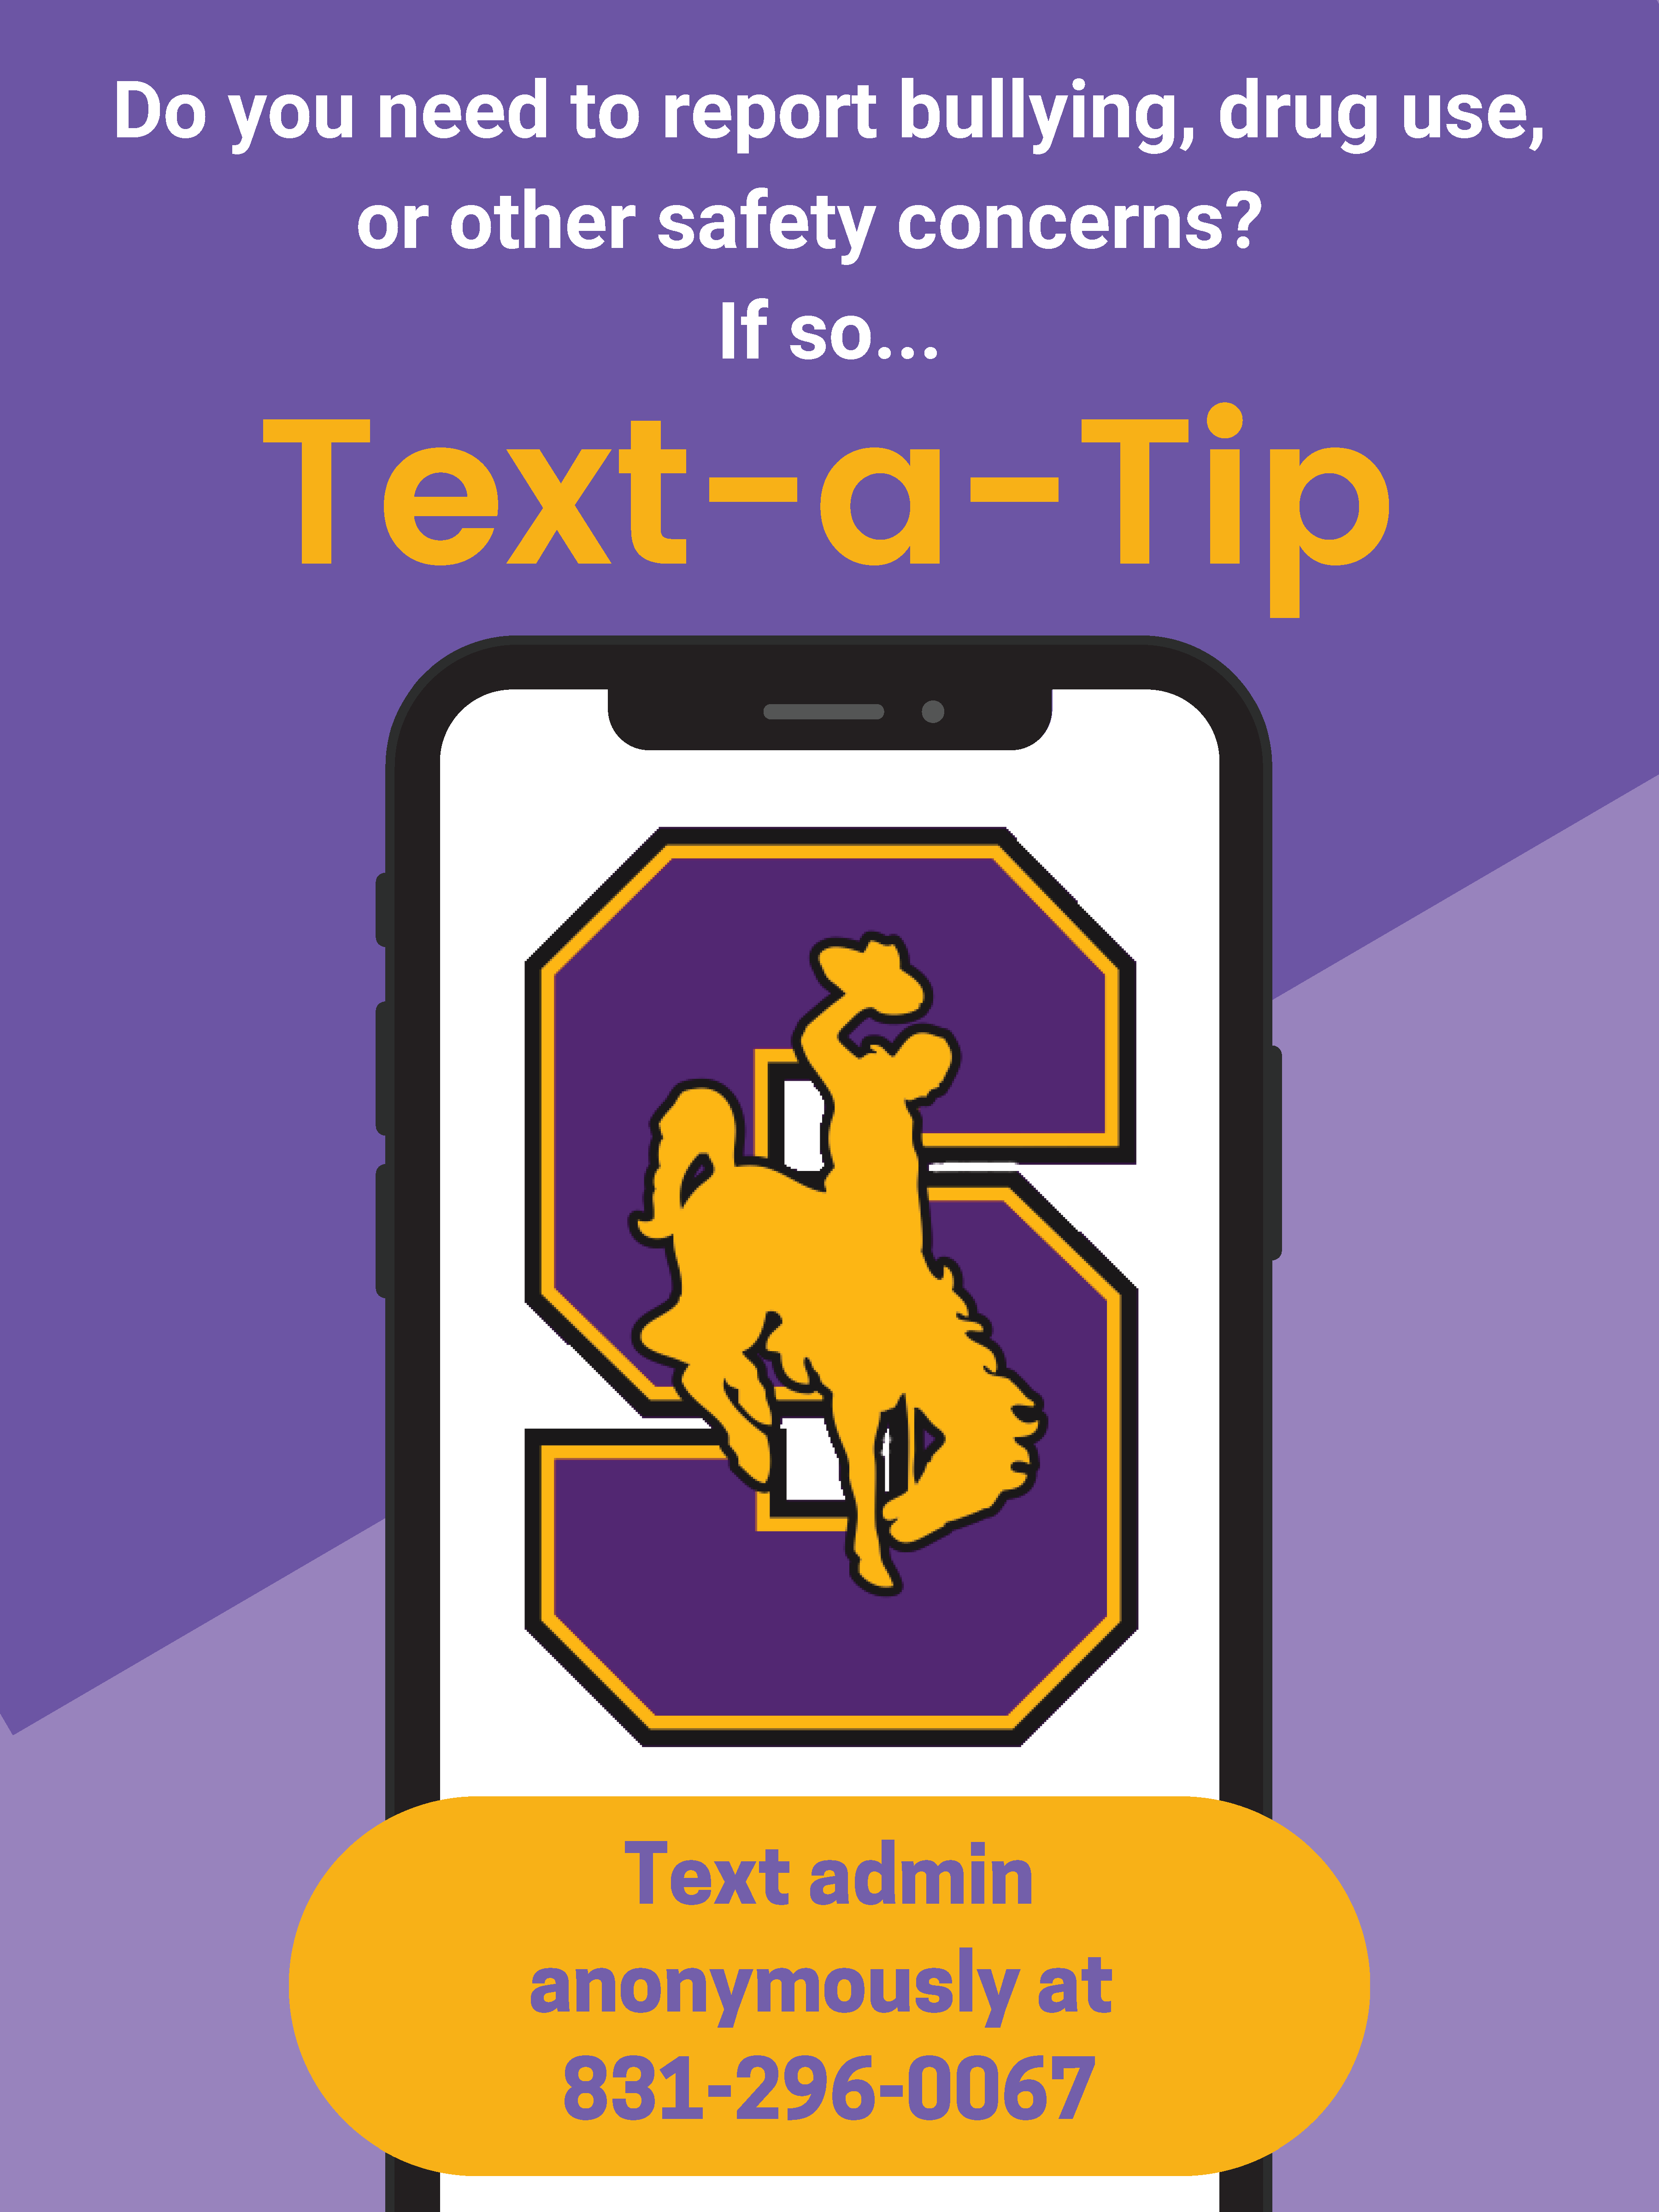 Text a tip information